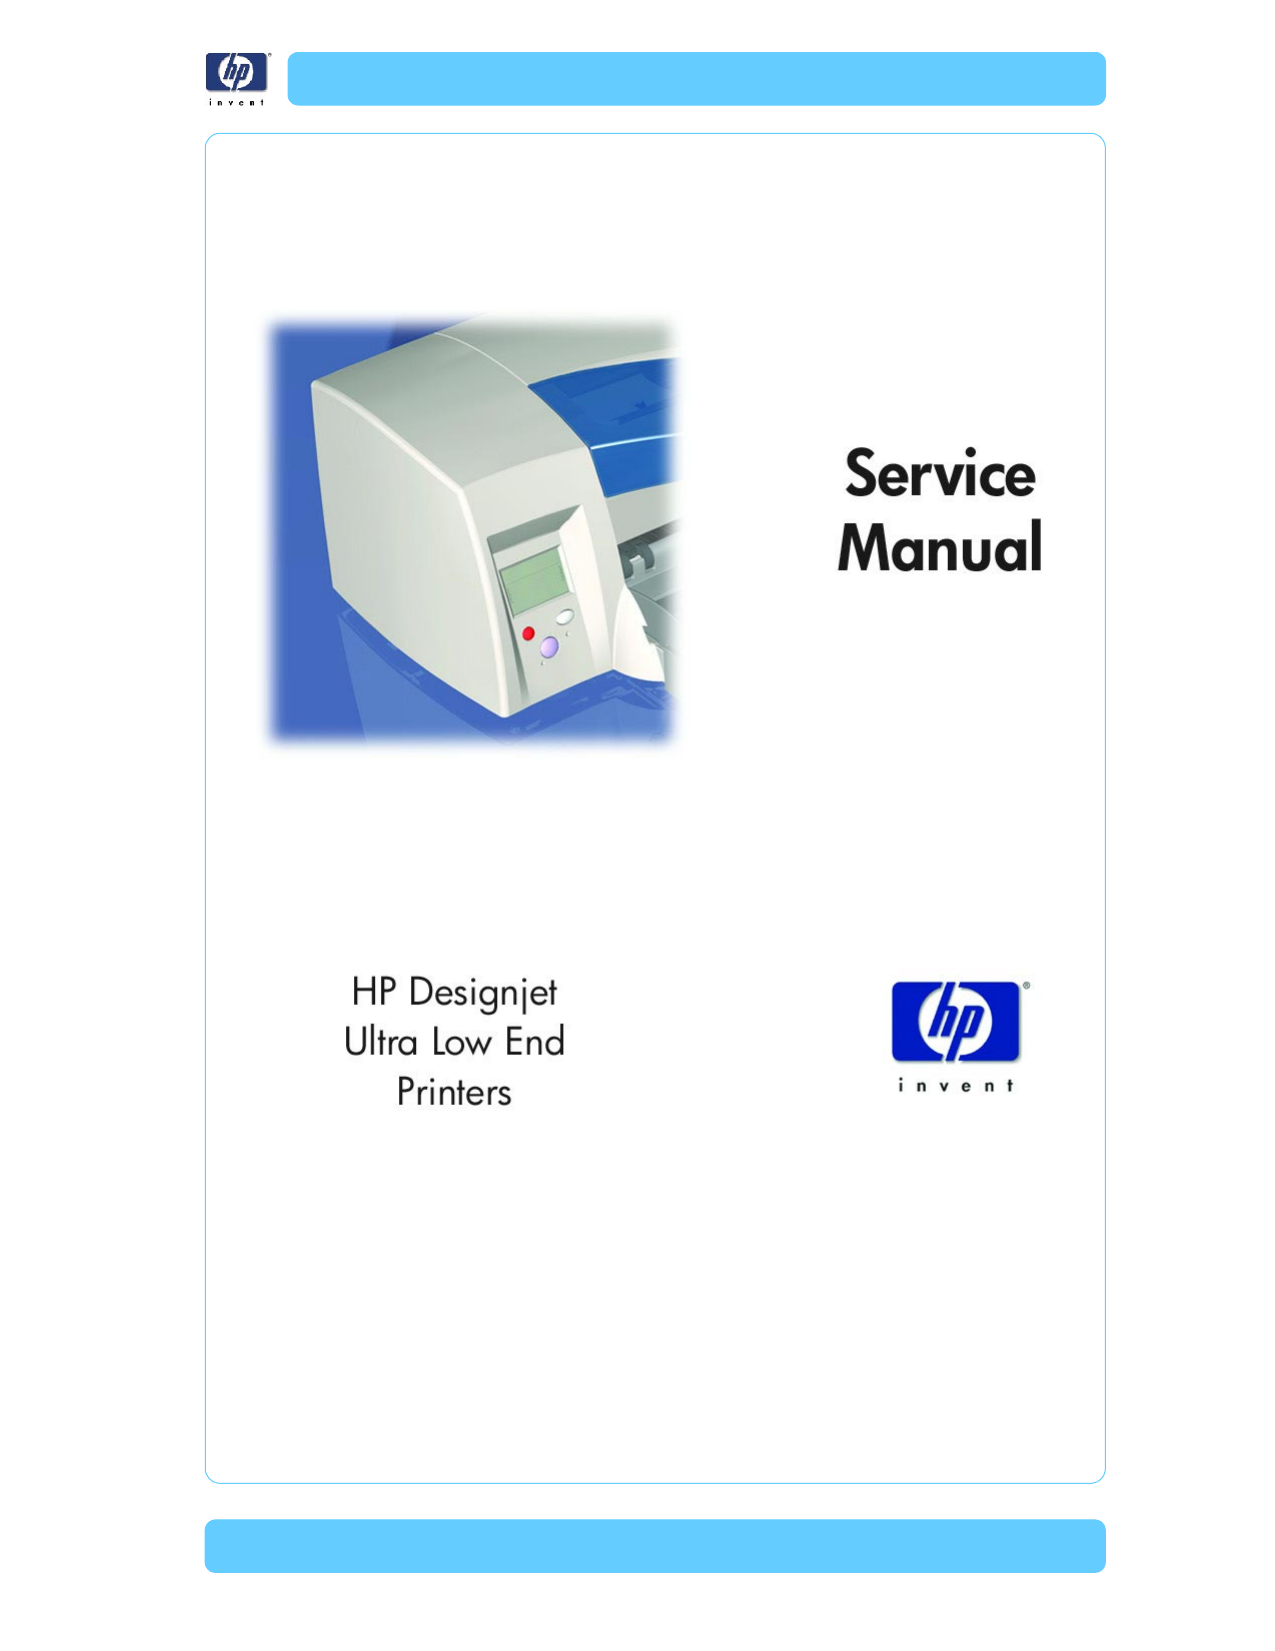 HP Designjet 10 ps, 20 ps, 30, 30 n, 50 ps, 70, 90, 100, 100+, 110+nr, 120, 120 nr, 130, 130nr manual Preview image 2